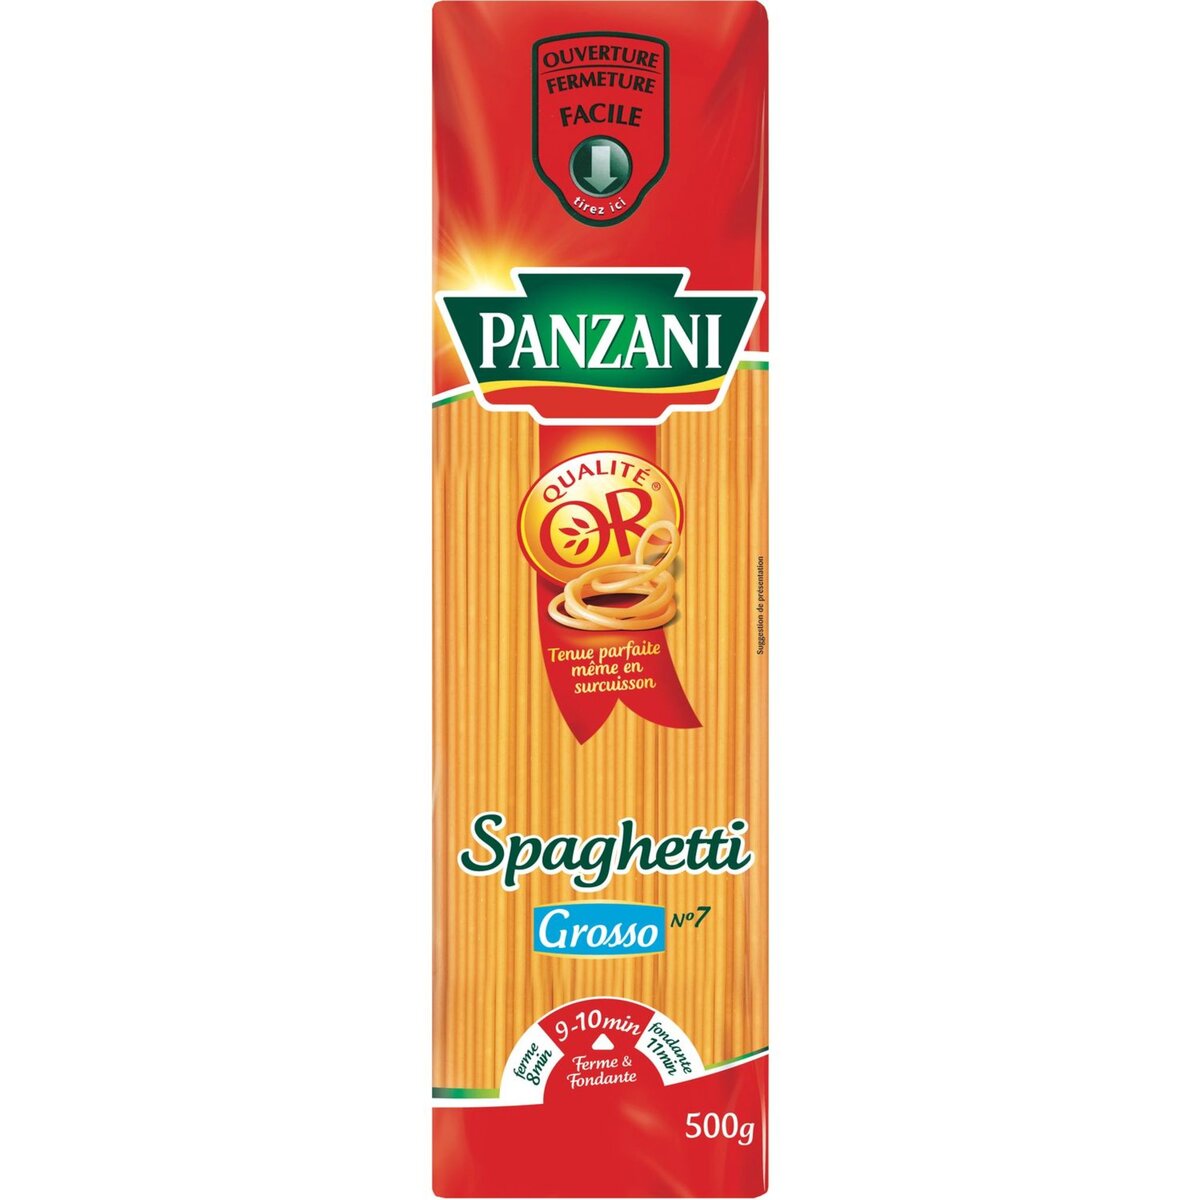 PANZANI Spaghetti grosso n°7 500g